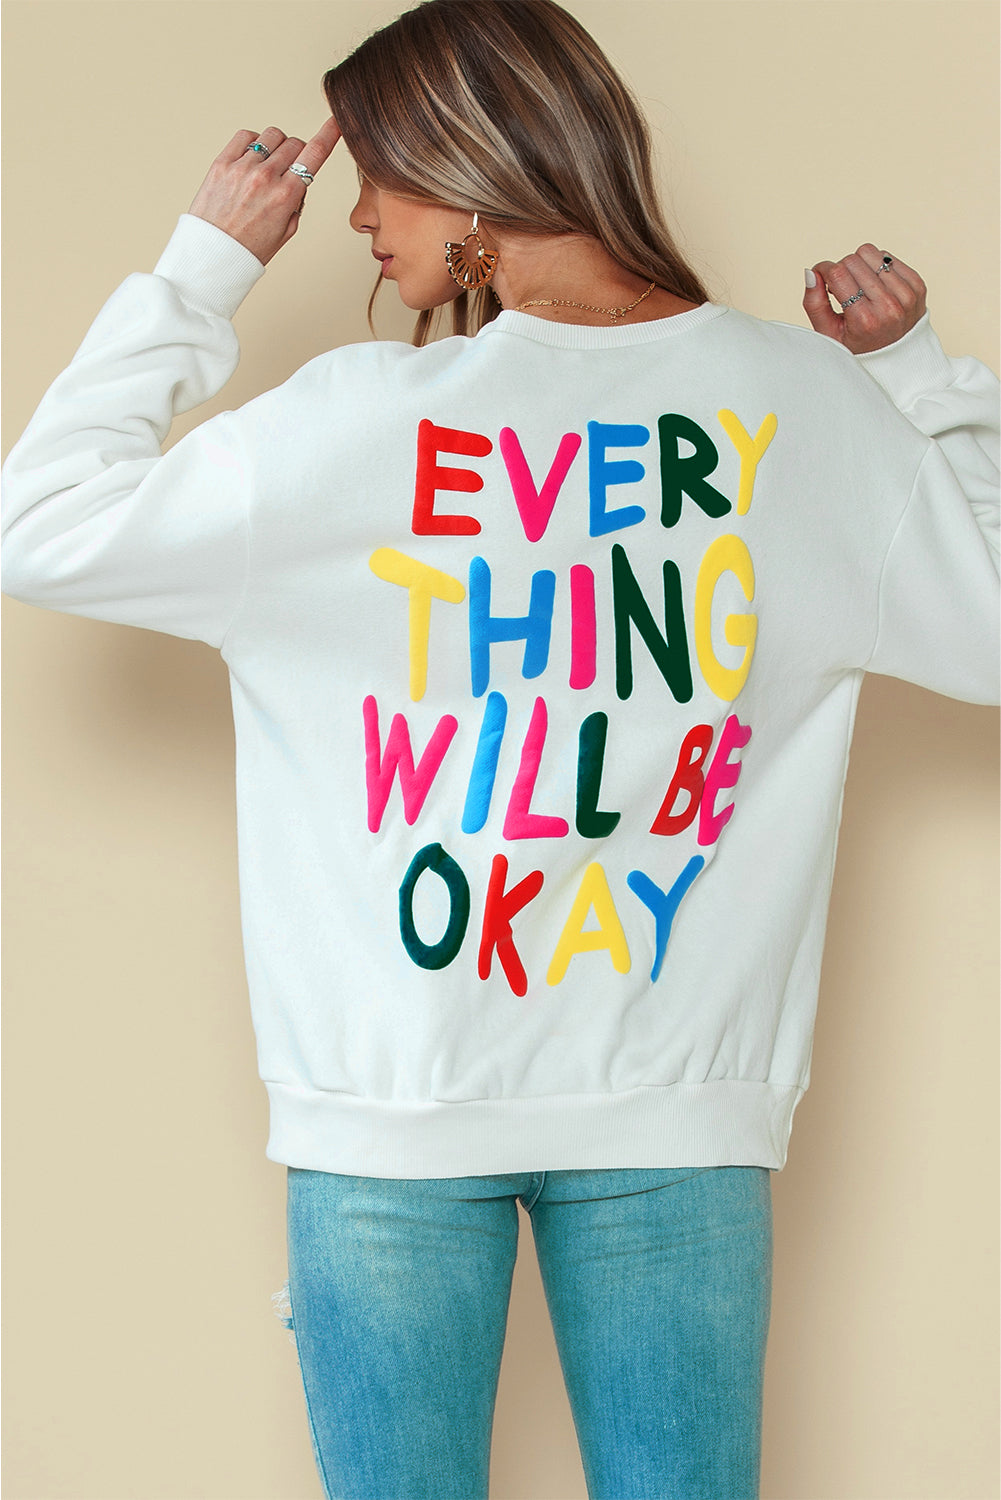 Everything Will Be Okay Sweatshirt